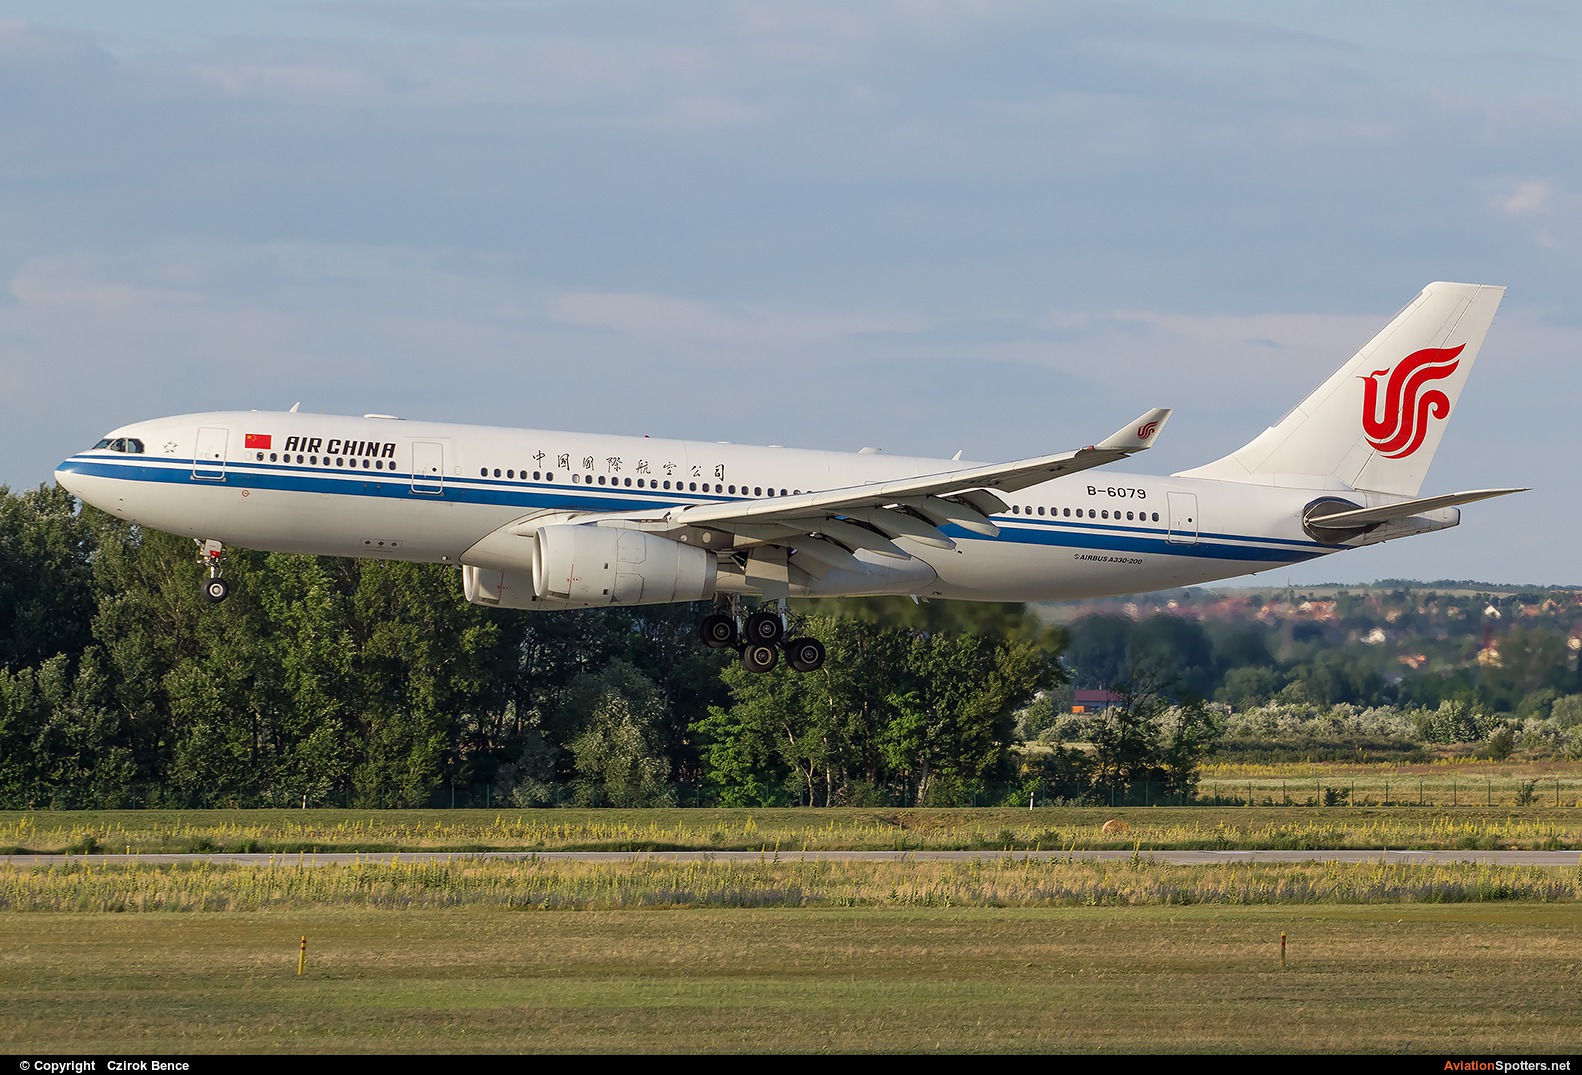 Air China  -  A330-243  (B-6079) By Czirok Bence (Orosmet)